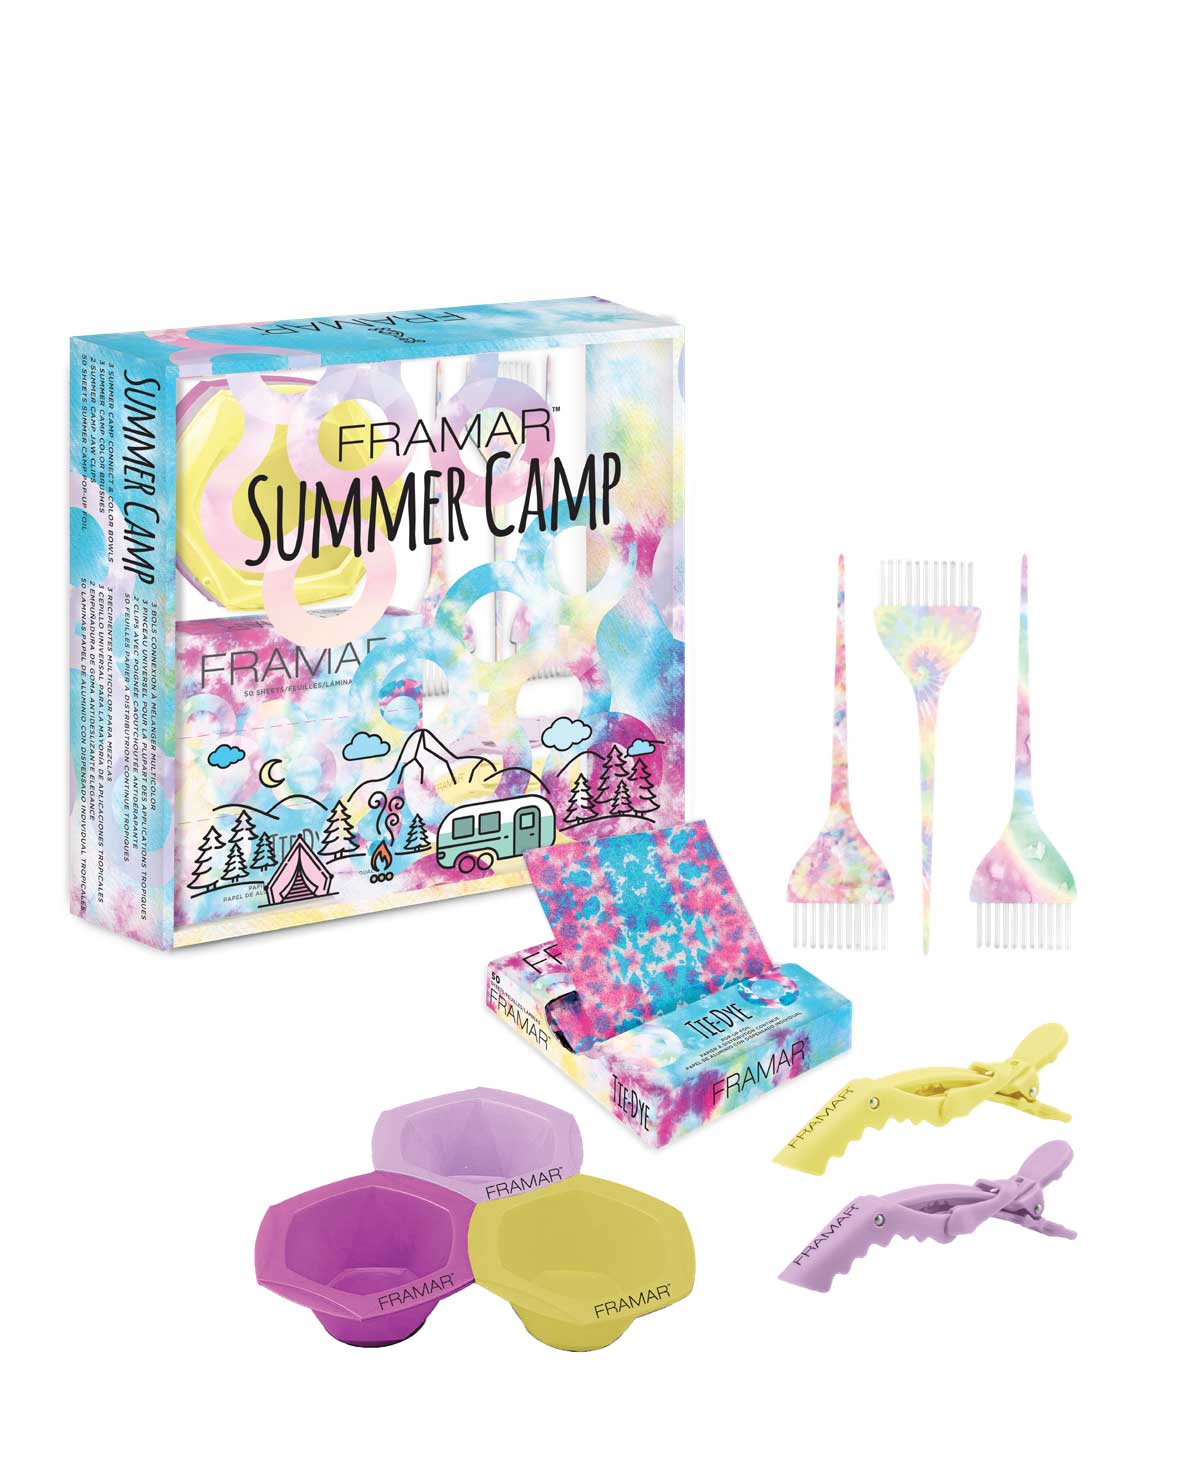 Framar Summer Camp Kit - Limited Edition